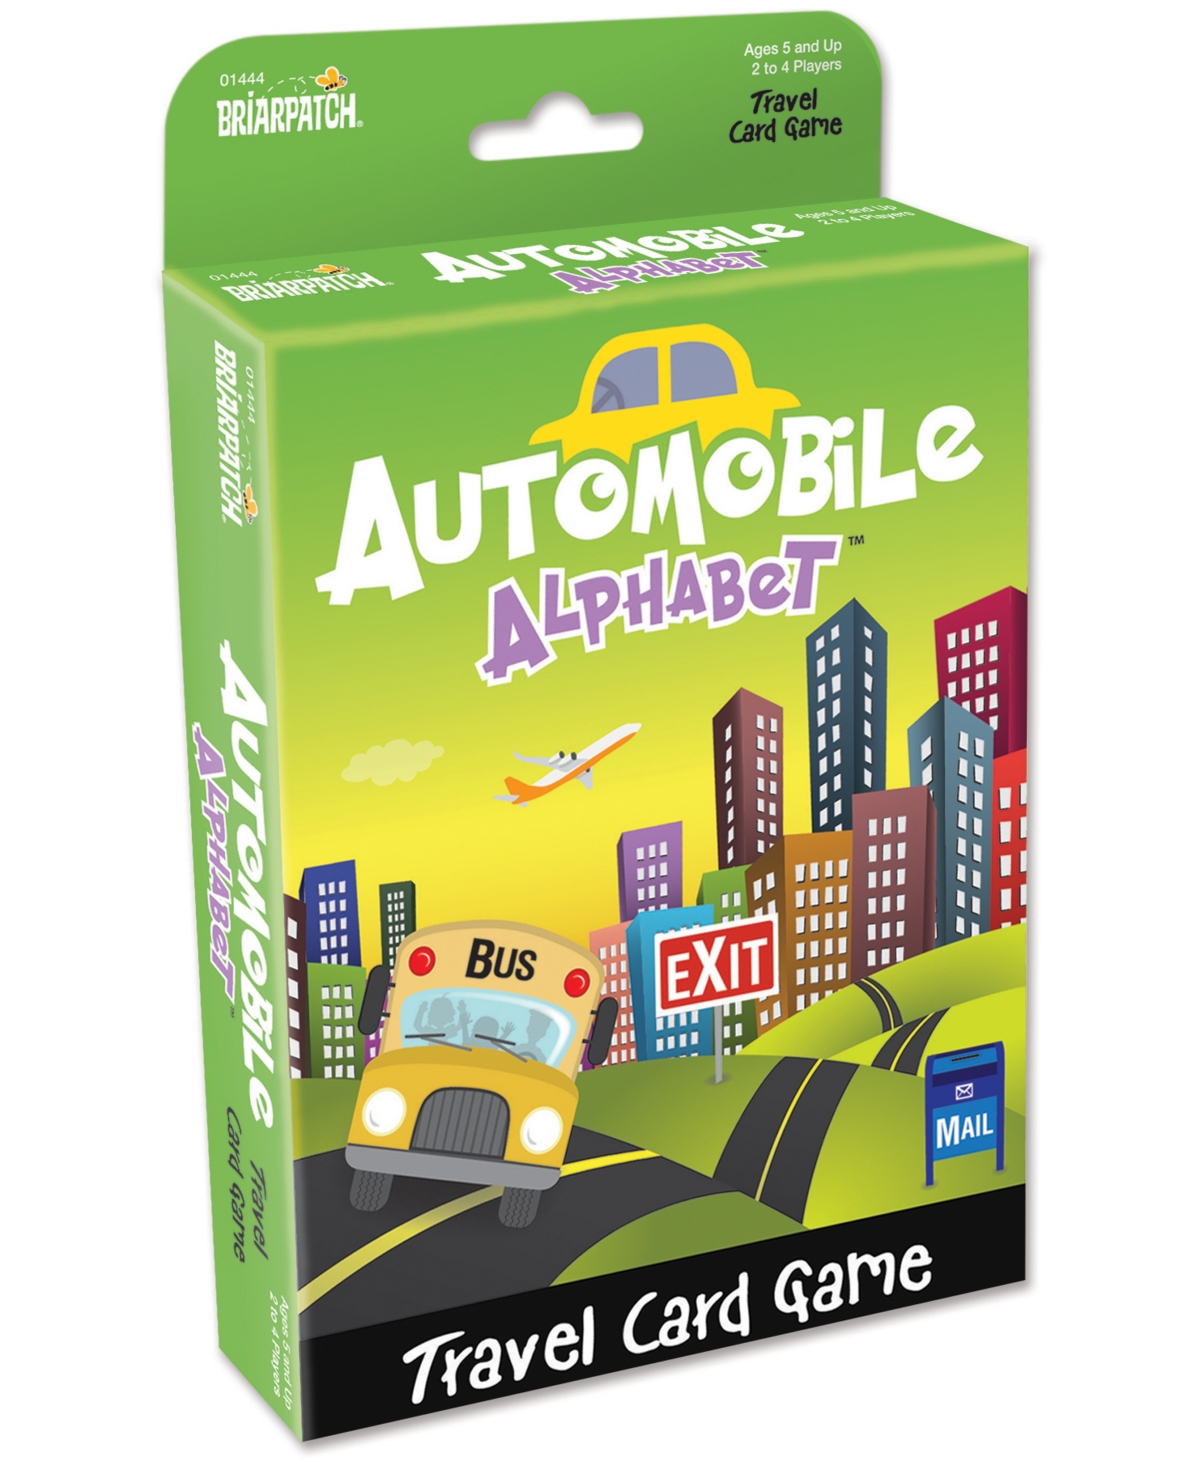 Briarpatch Automobile Alphabet Travel Card Game Set, 53 Piece - Multi